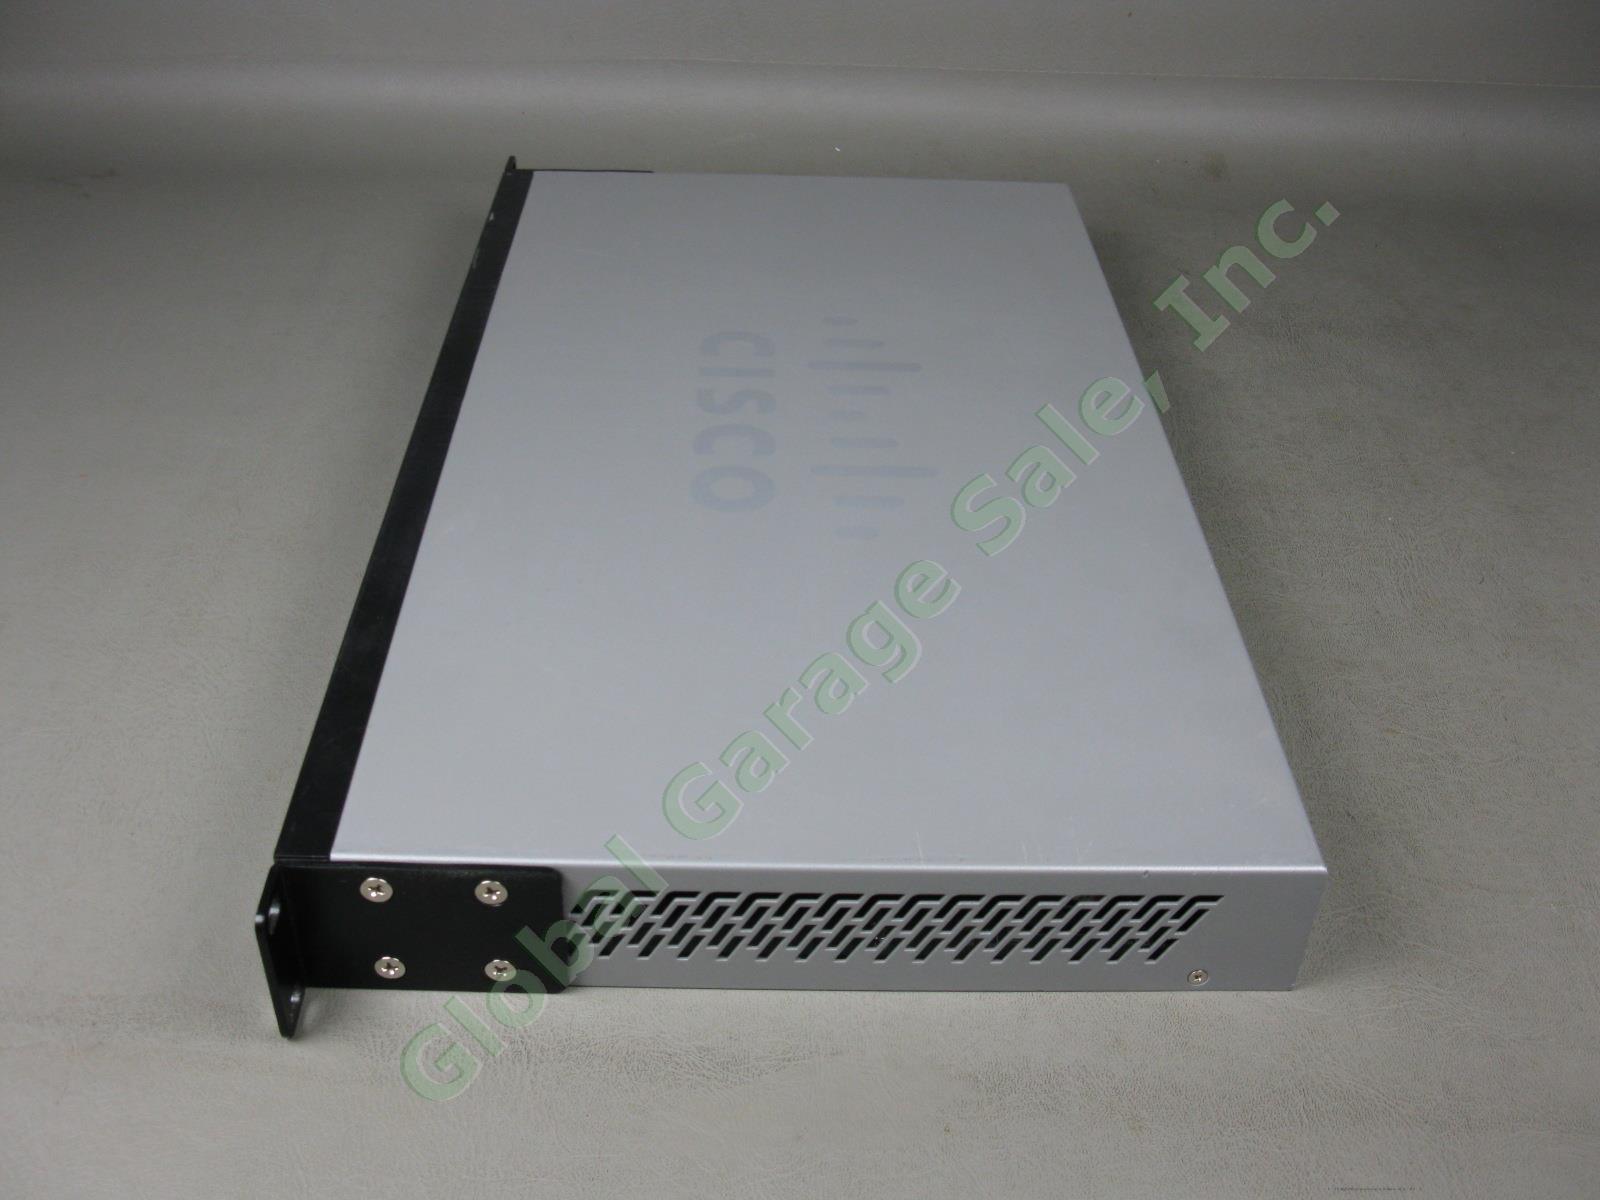 Cisco Small Business SG300-52 Port Gigabit Managed Ethernet Switch SRW2048-K9VO1 3